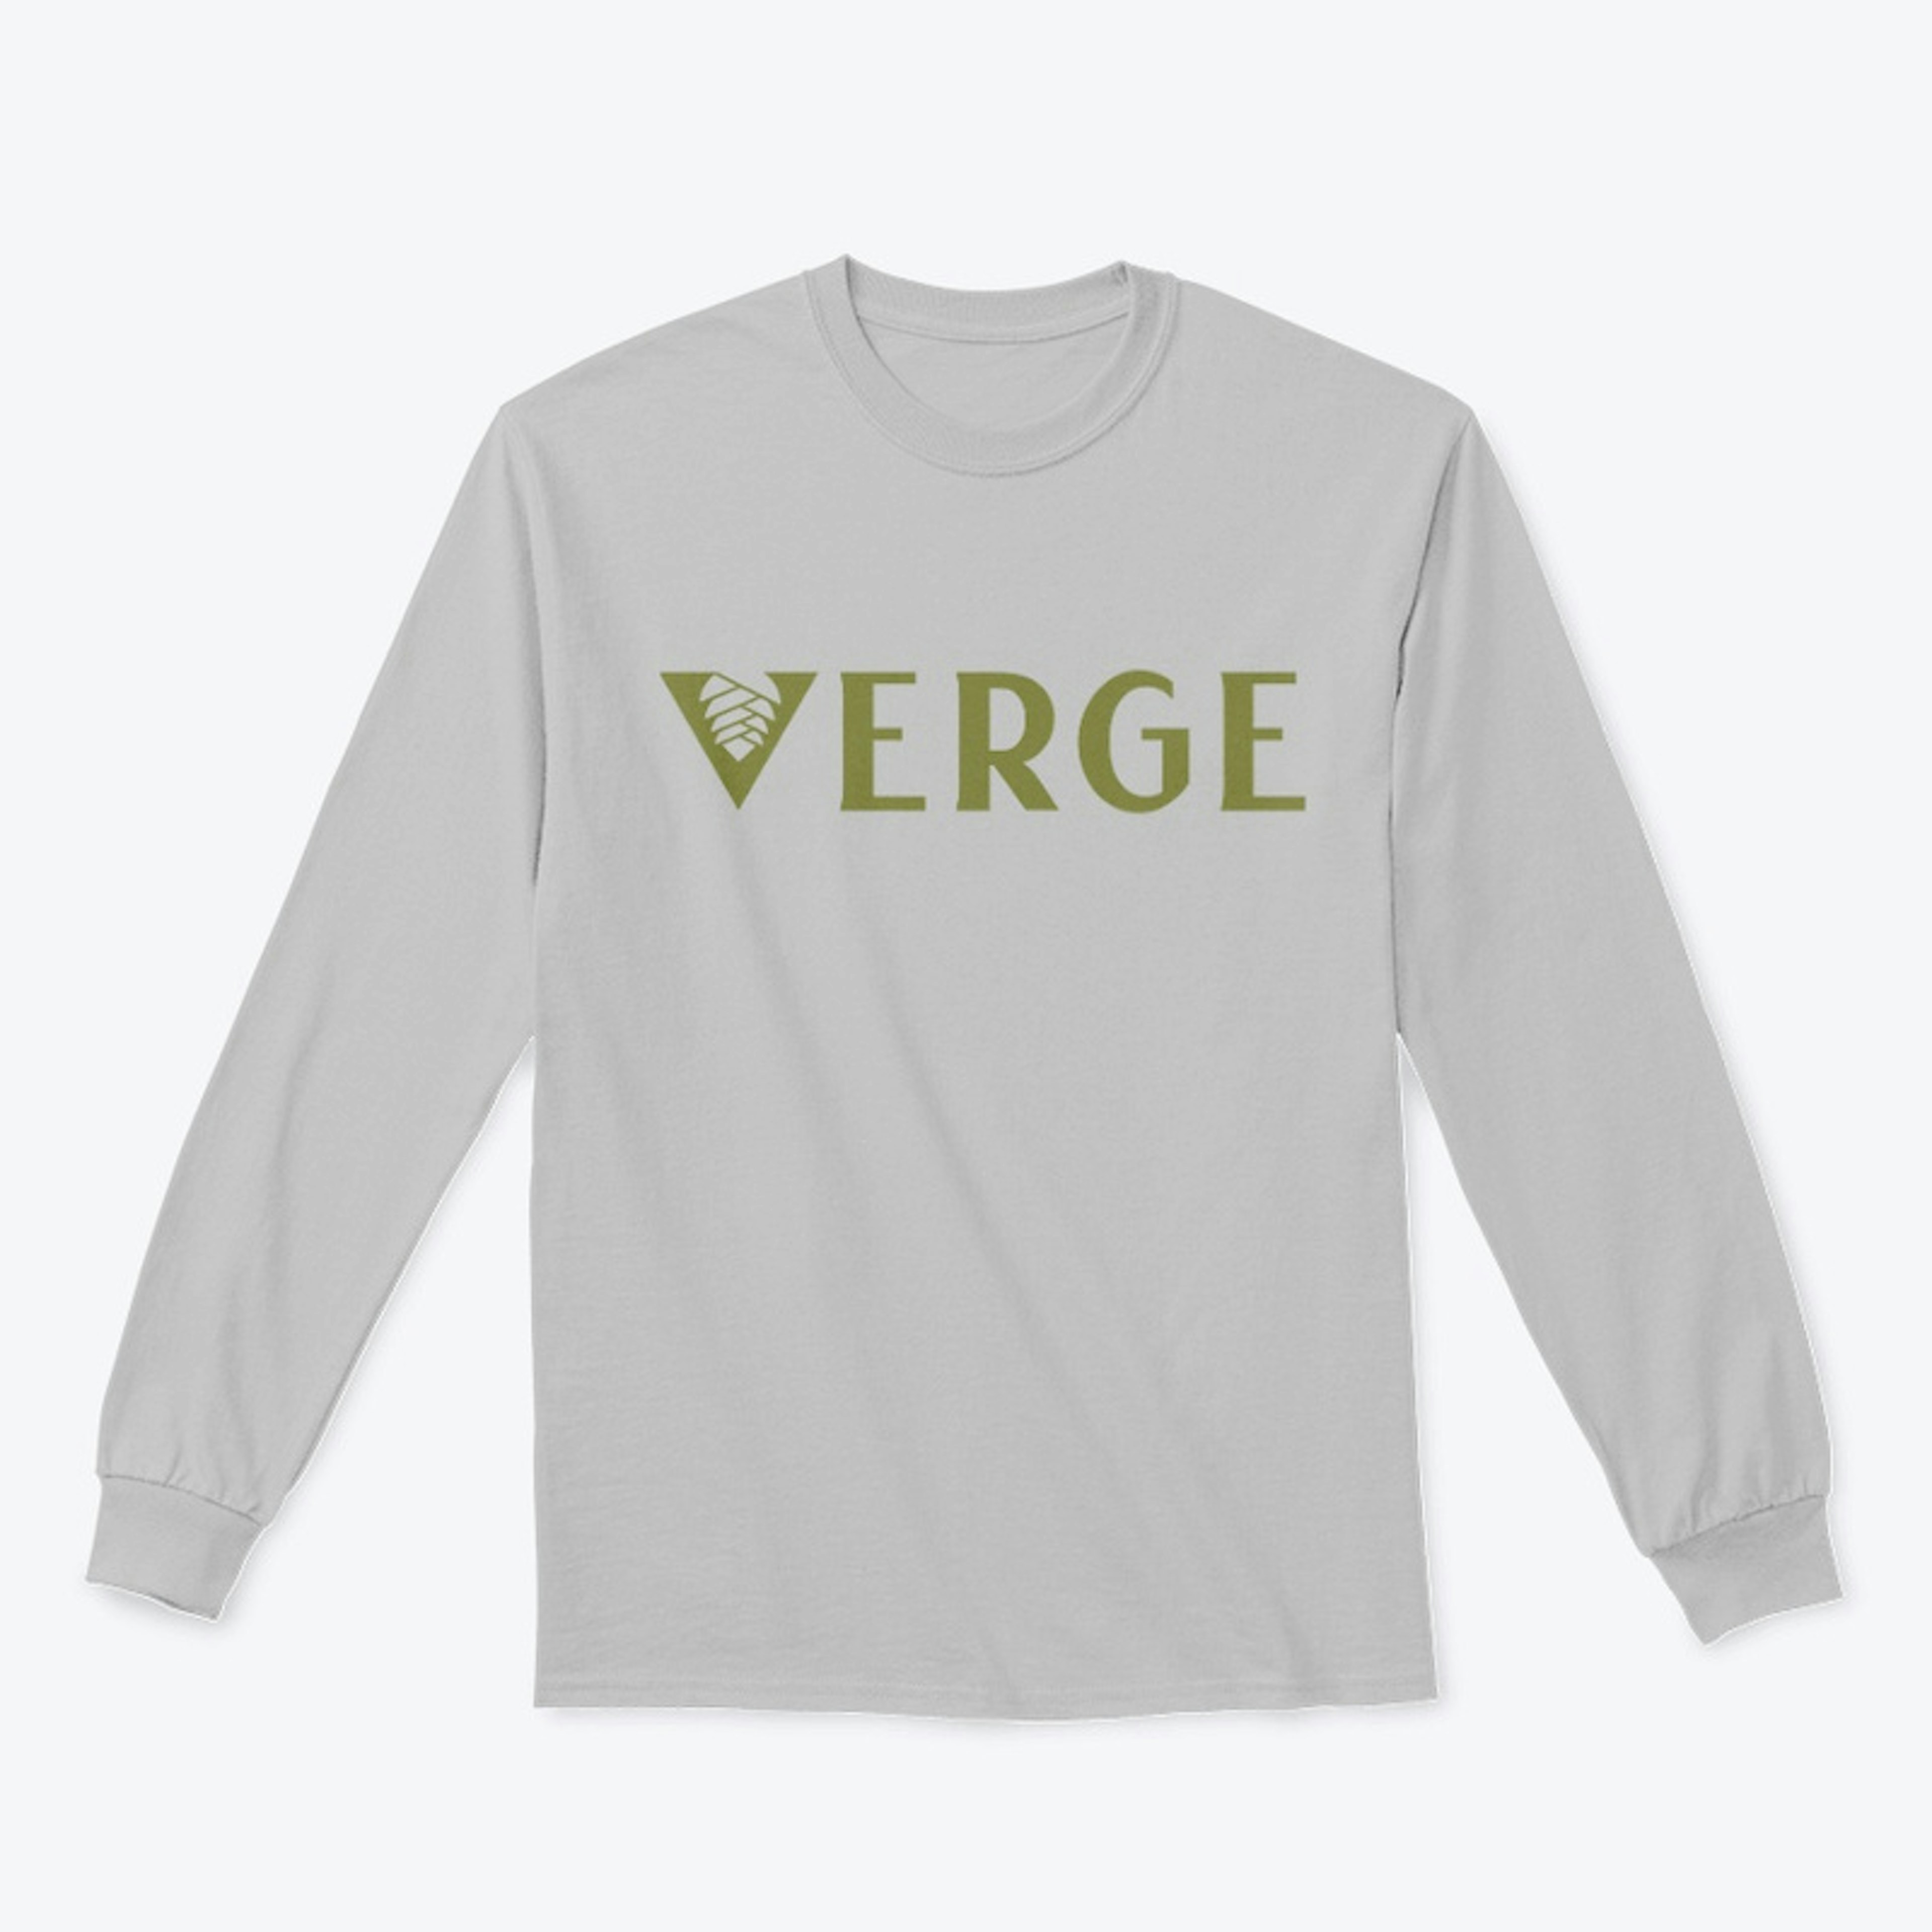 Verge Logo Collection